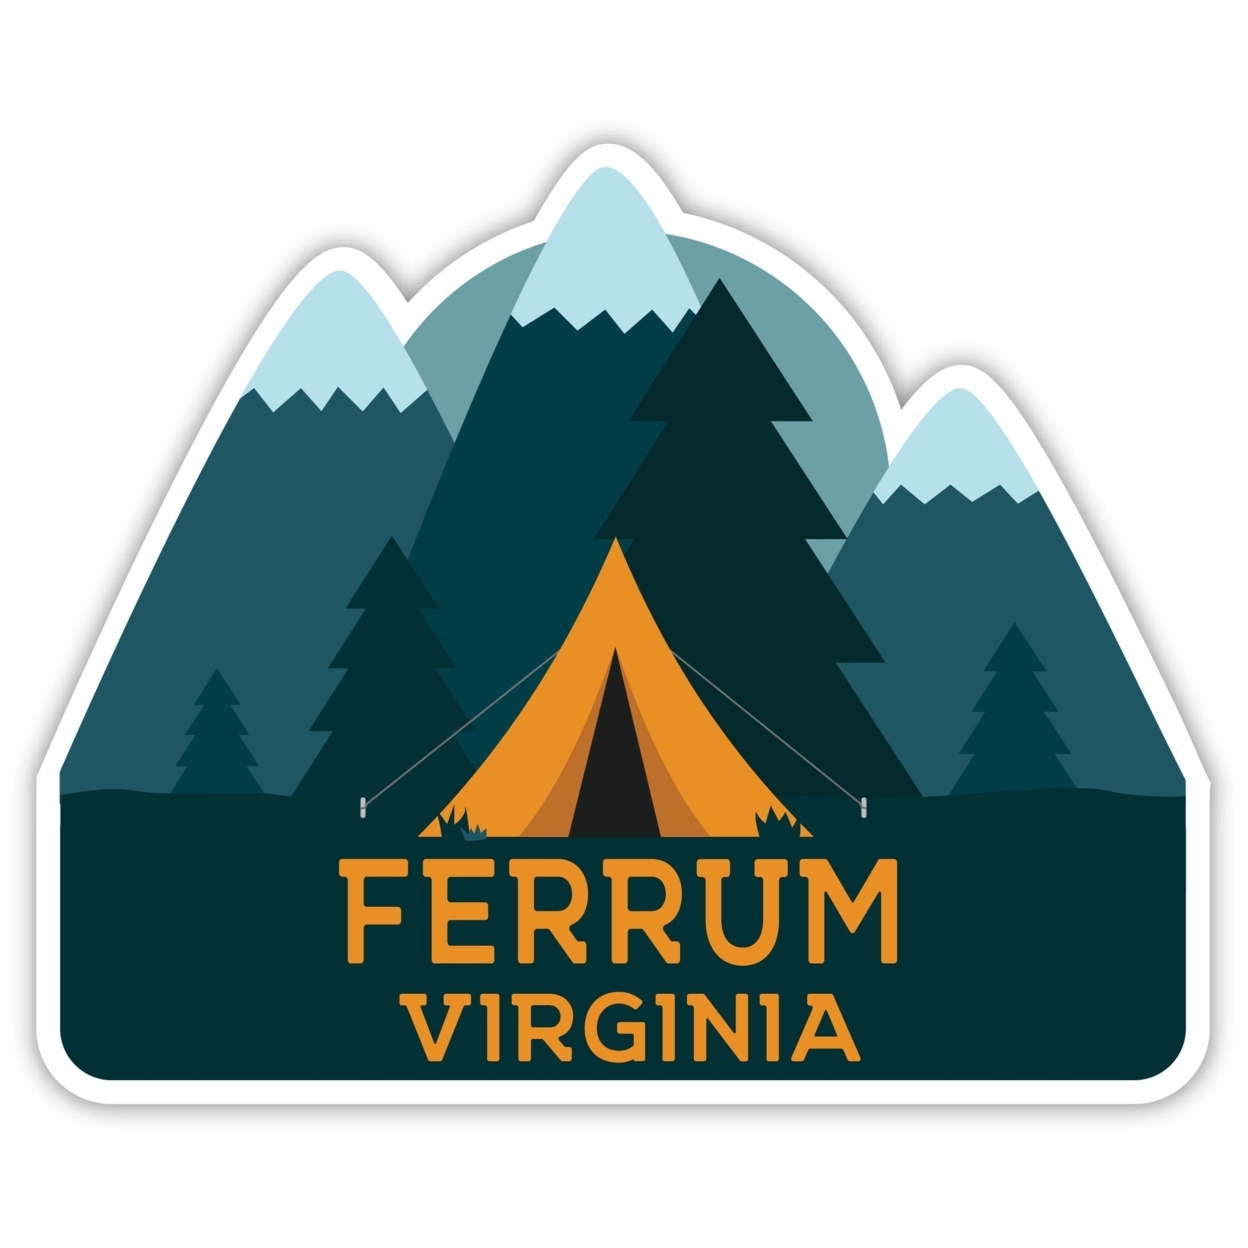 Ferrum Virginia Souvenir Decorative Stickers (Choose Theme And Size) - 4-Pack, 2-Inch, Tent